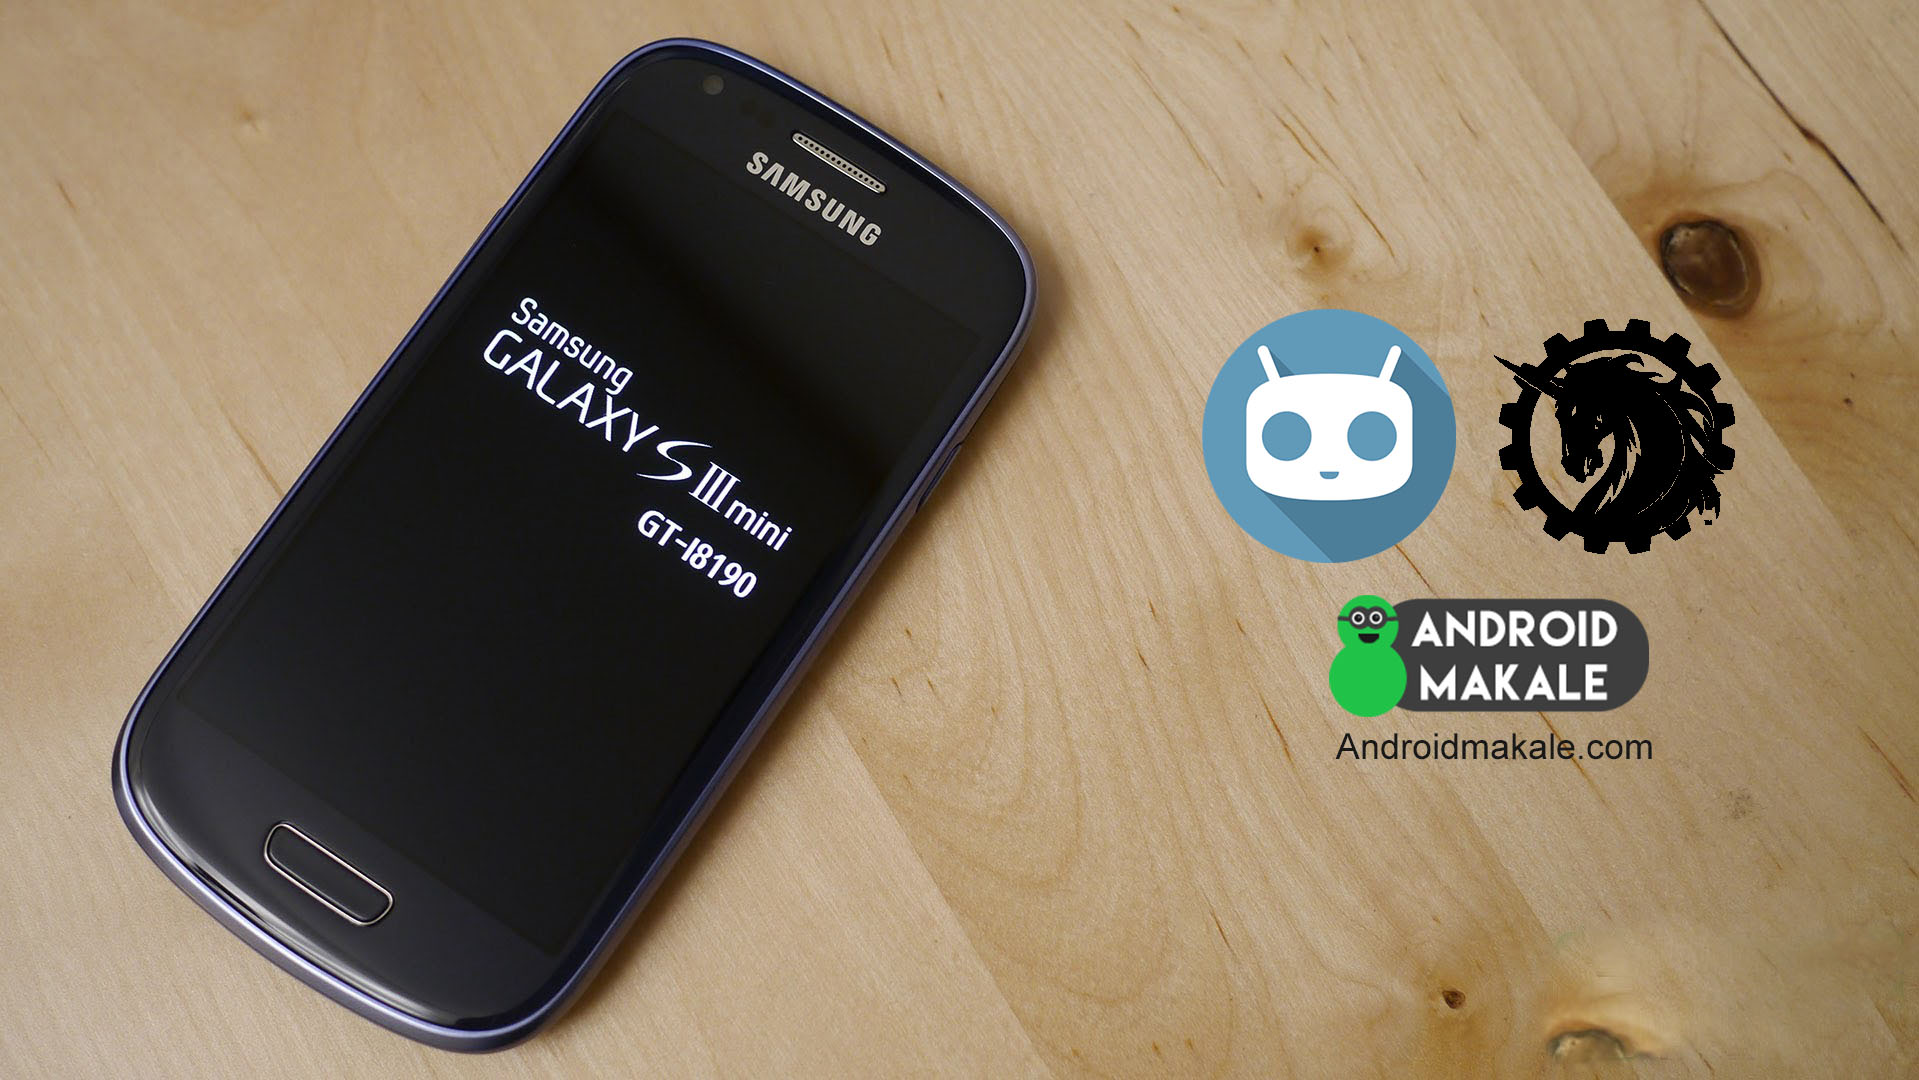 Samsung Galaxy S3 Mini Custom Romlar rom indir rom download lineage os indirme merkezi cyanogenmod custom rom indir custom rom download aosp aokp android makale 